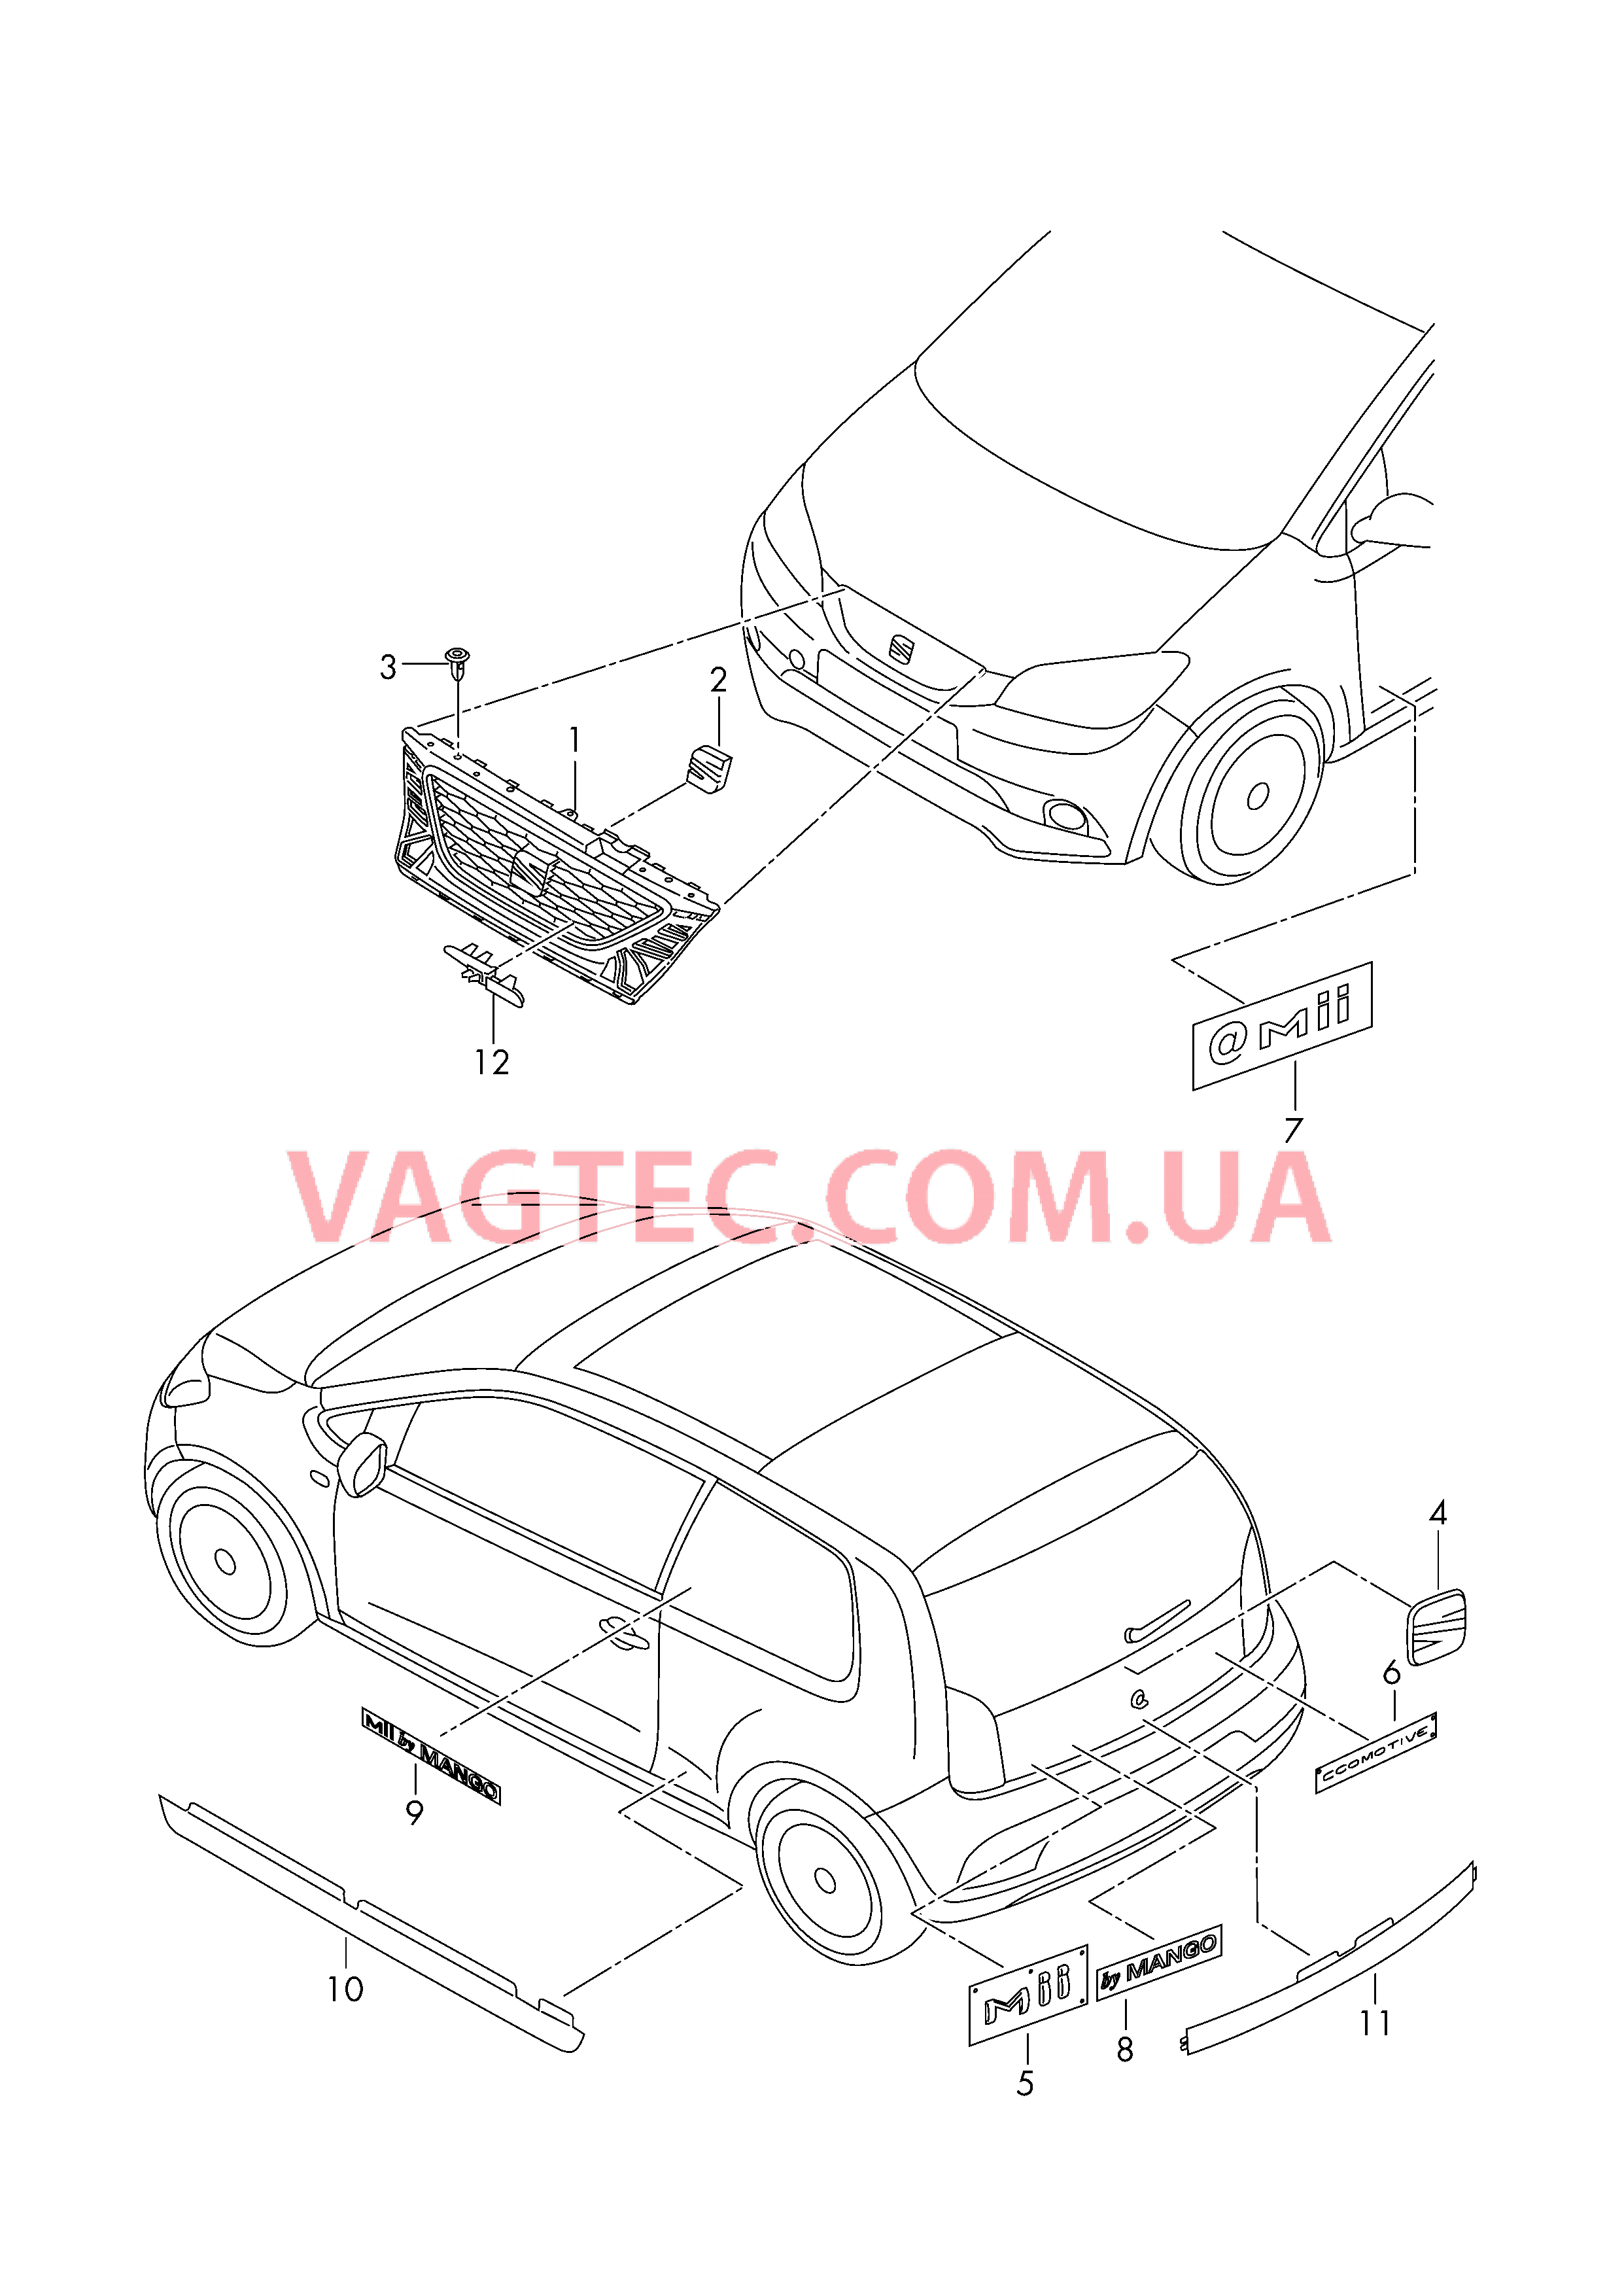 Решётка радиатора Надписи Брелок  для SEAT MI 2019